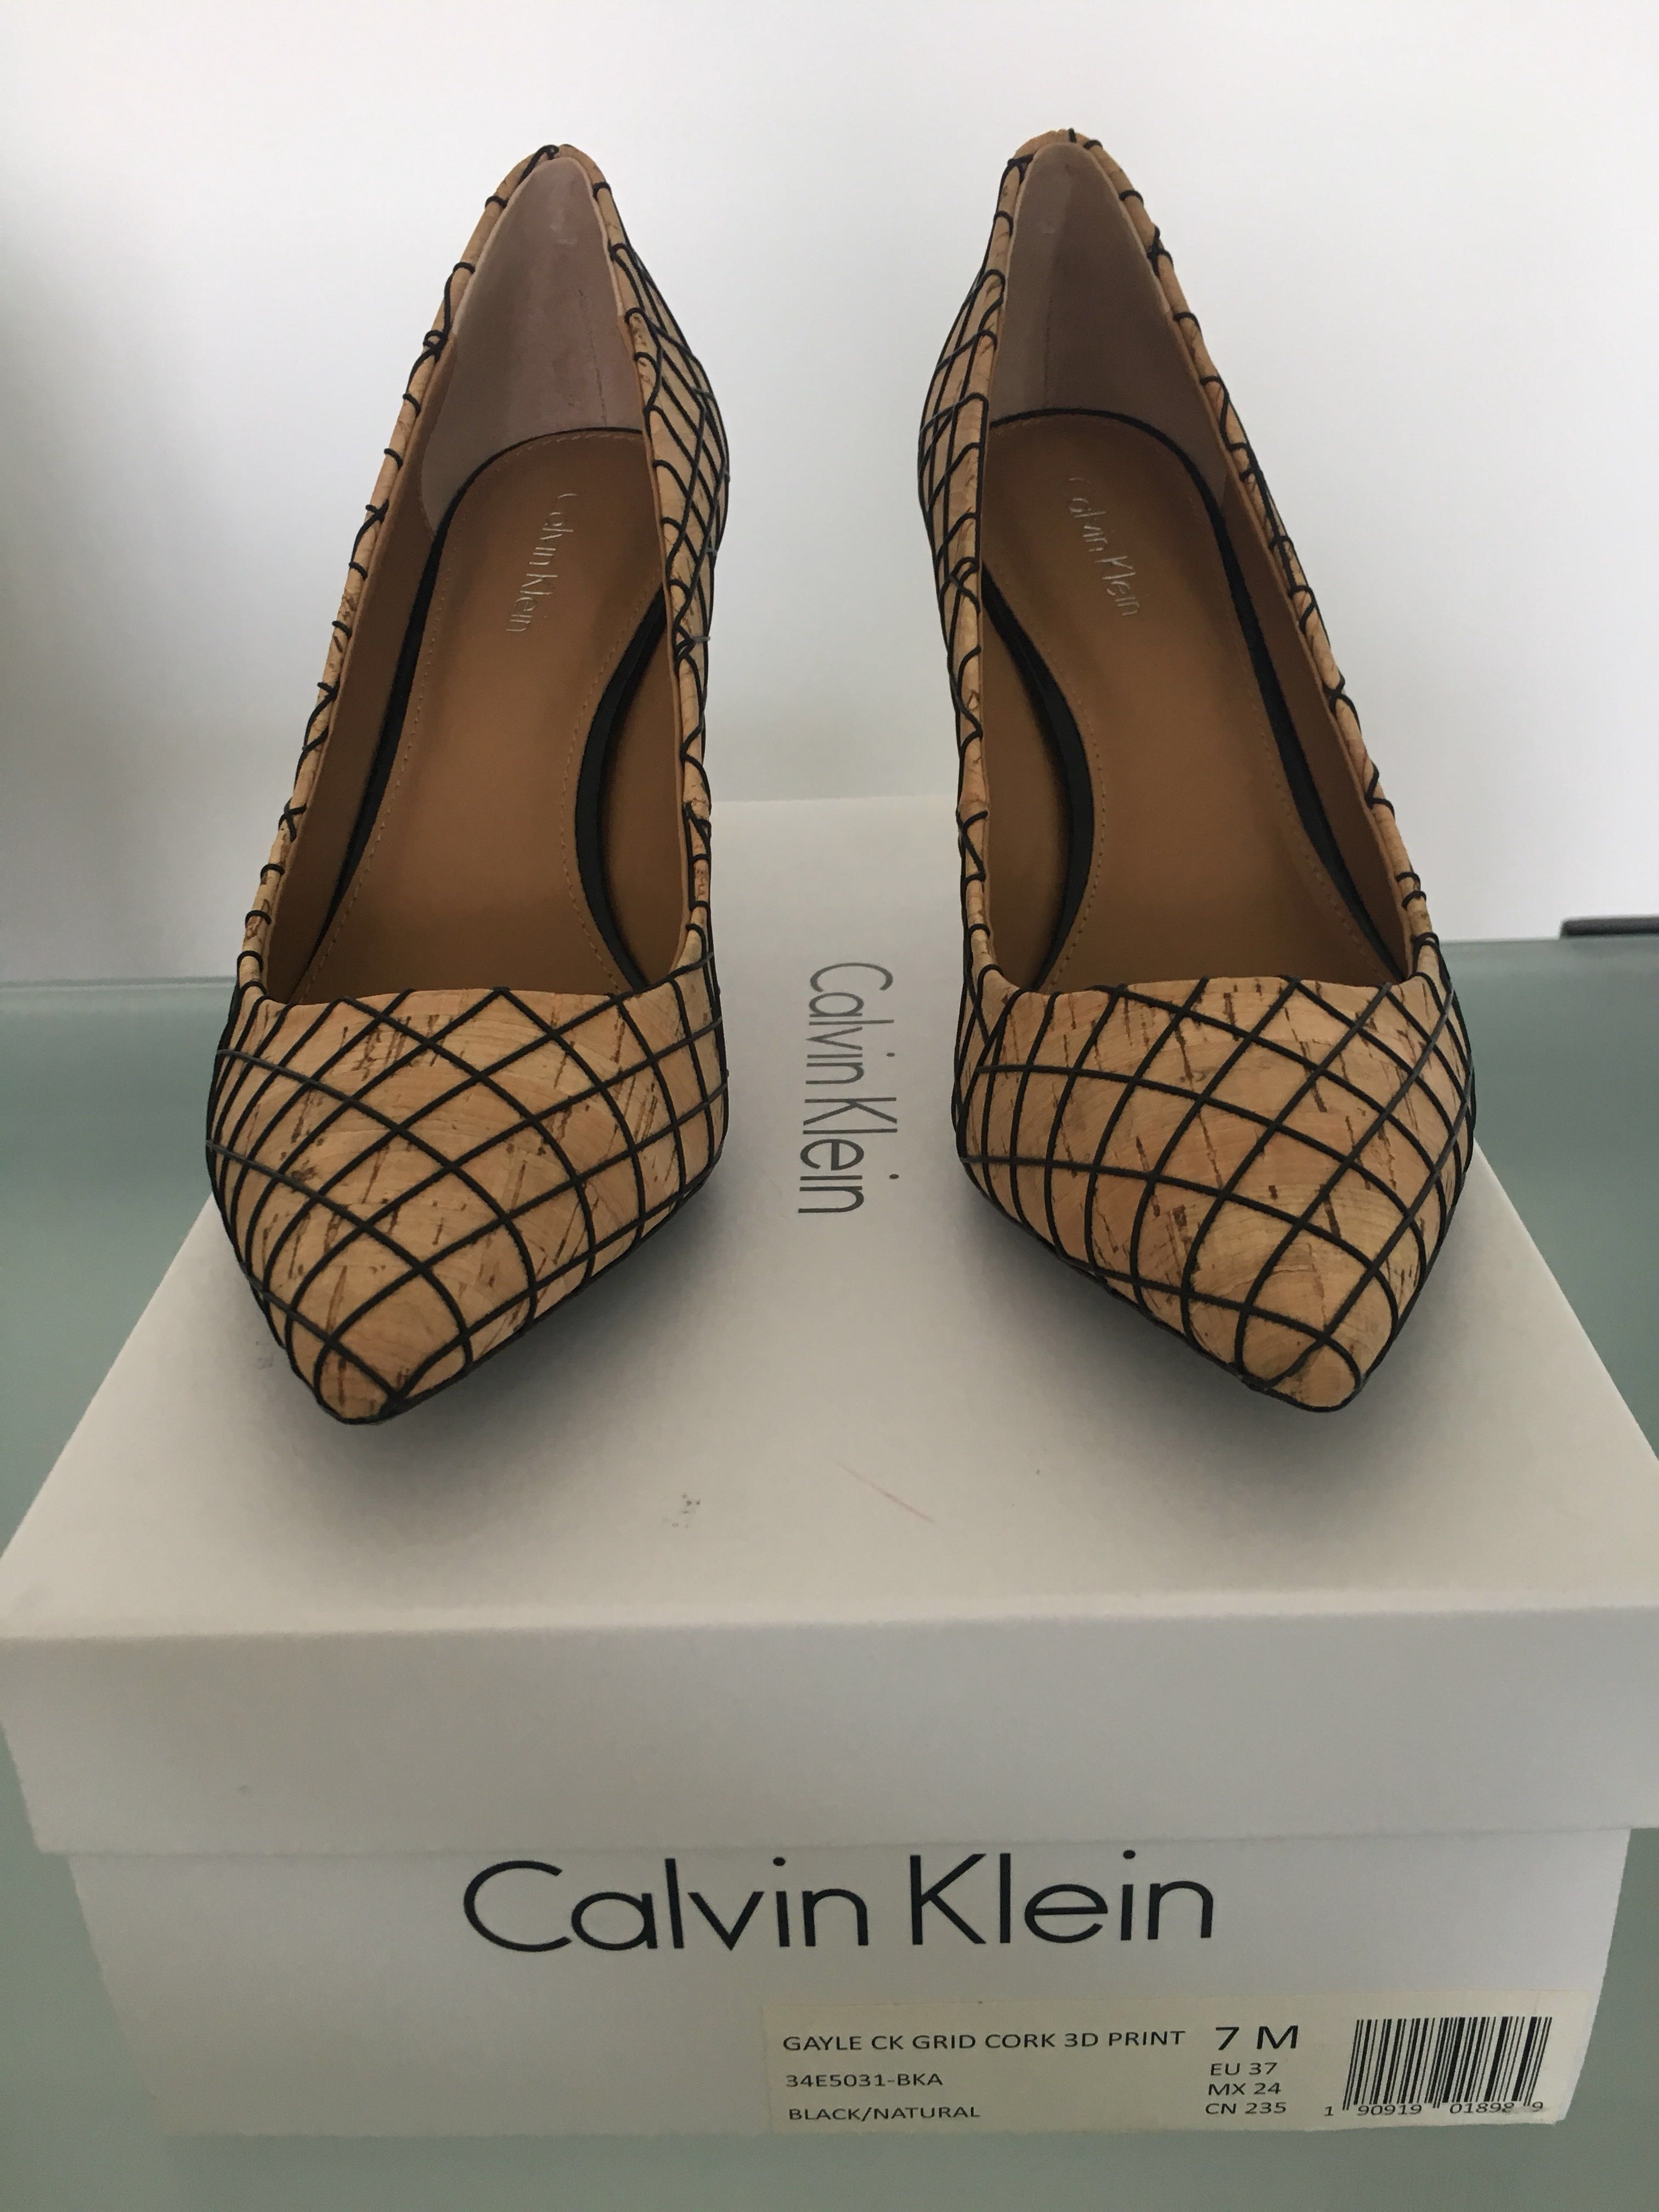 New Calvin Klein Shoes, Women's Fashion 